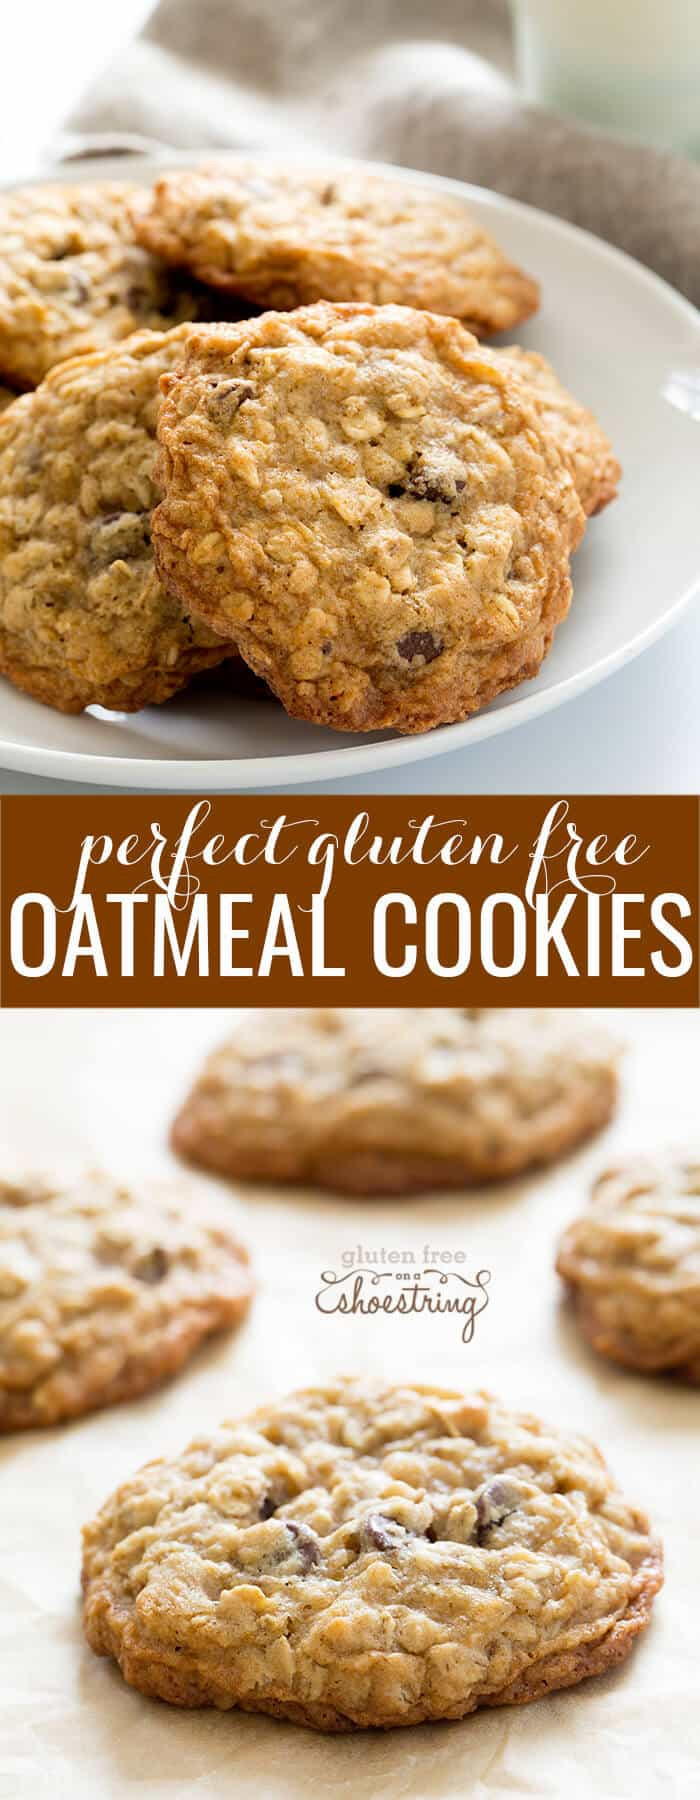 Gluten Free Oatmeal Recipes
 Gluten Free Oatmeal Cookies